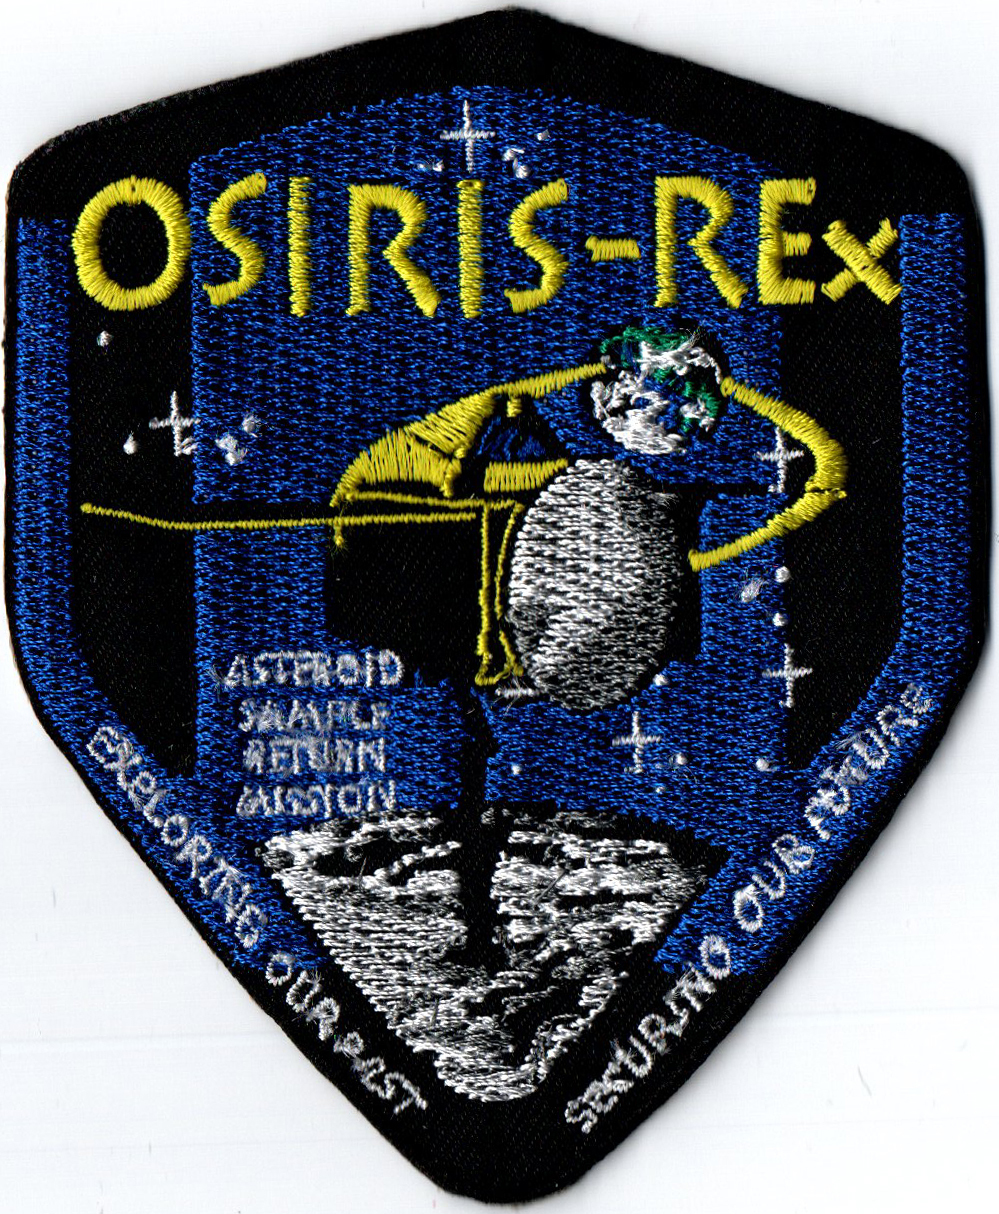 Primary image for Human Space Flights OSIRIS-REx NASA Asteroid Sample Return Badge Iron On Patch